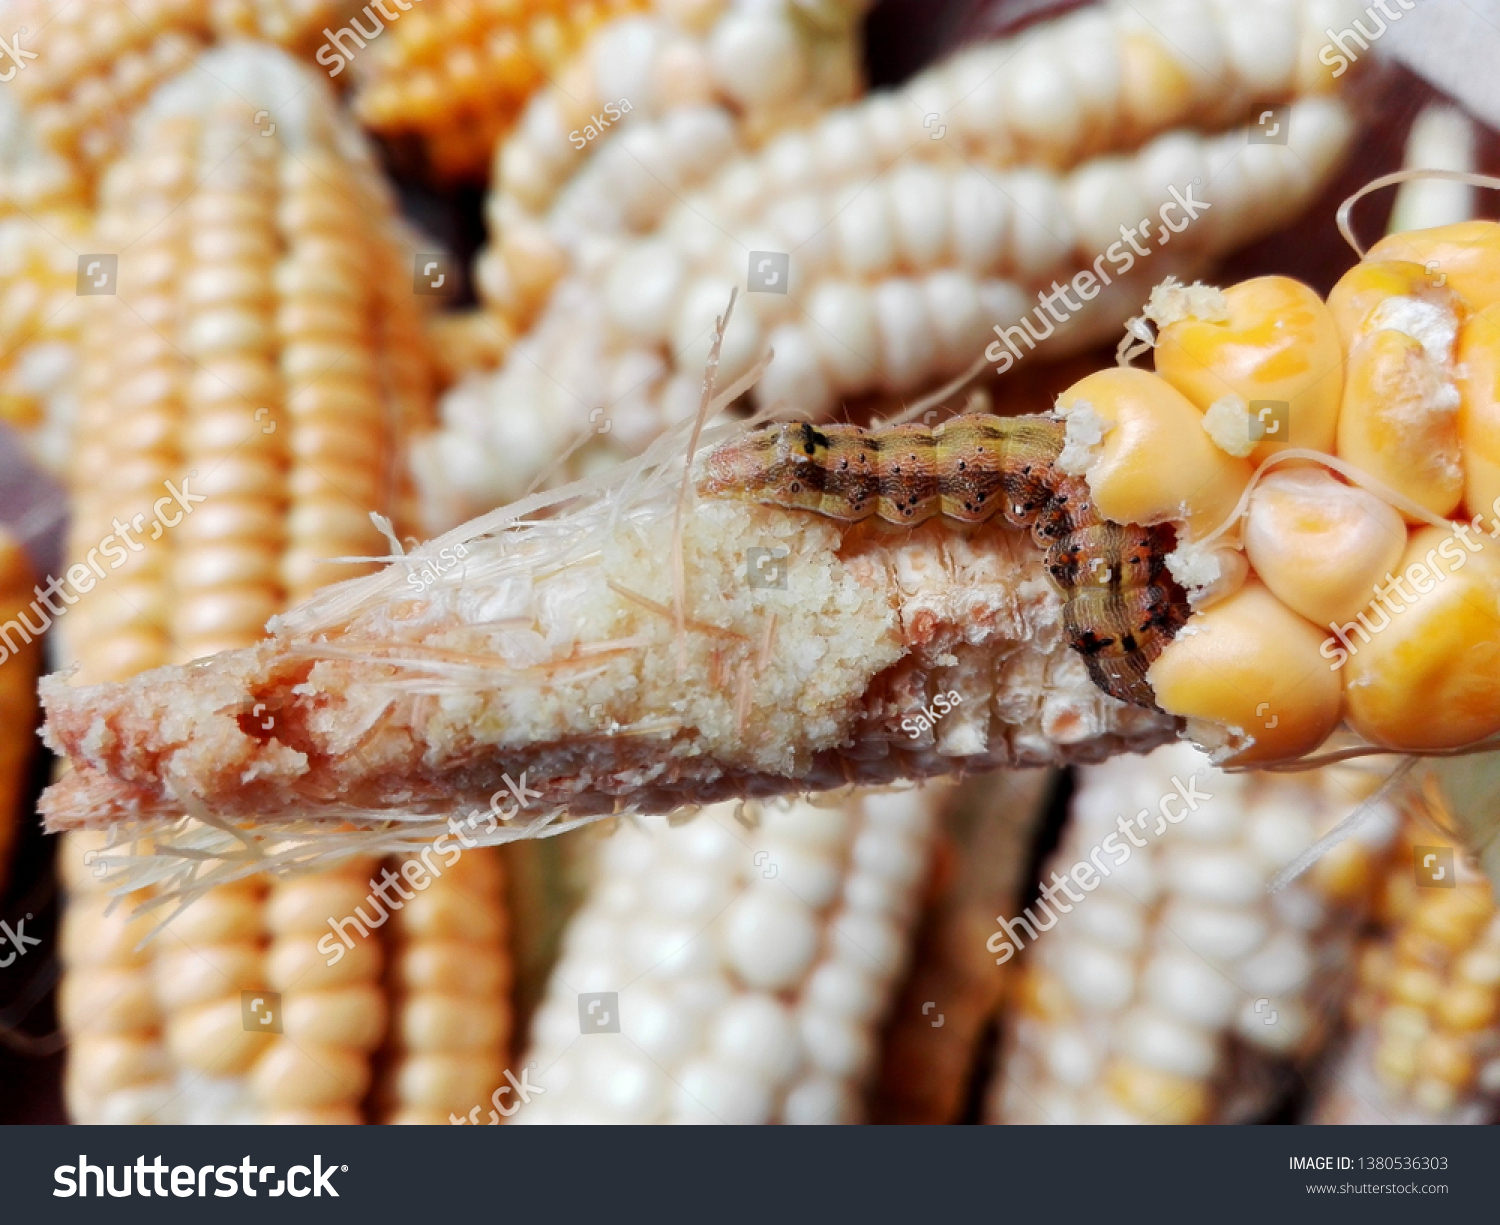 Caterpillar of European corn borer or high-flyer (Ostrinia nubilalis) on corn cob & grains. Moth of family Crambidae. Pest caterpillar of maize crop. Earworm or bollworm caterpillar eat fresh corn cob #1380536303